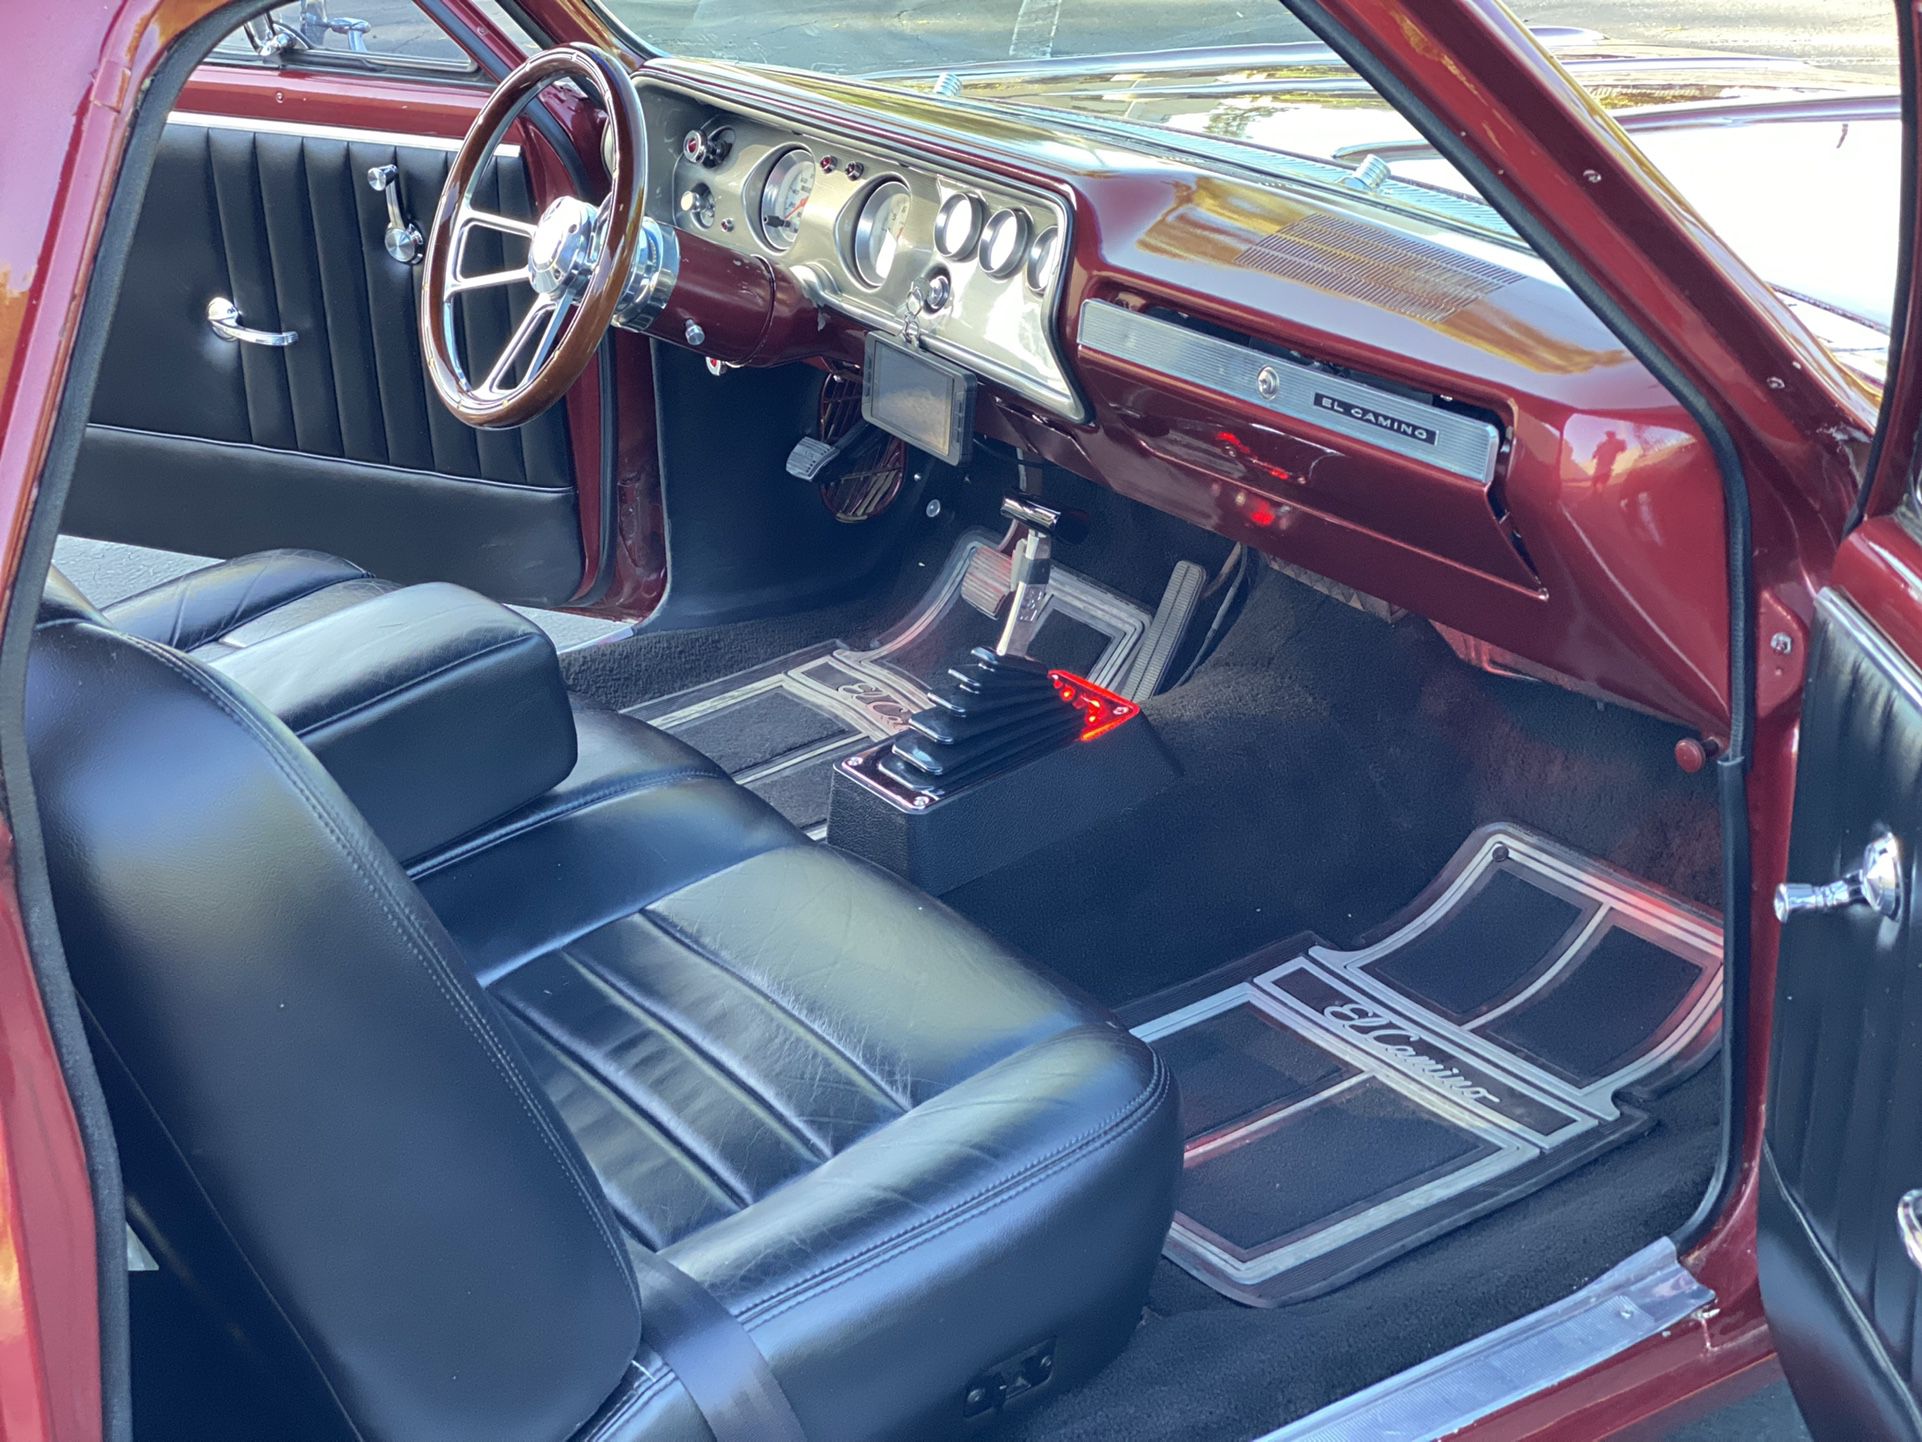 1964 Chevrolet El Camino ( Chevy Chevelle Nova Muscle Car Classic Low Rider )